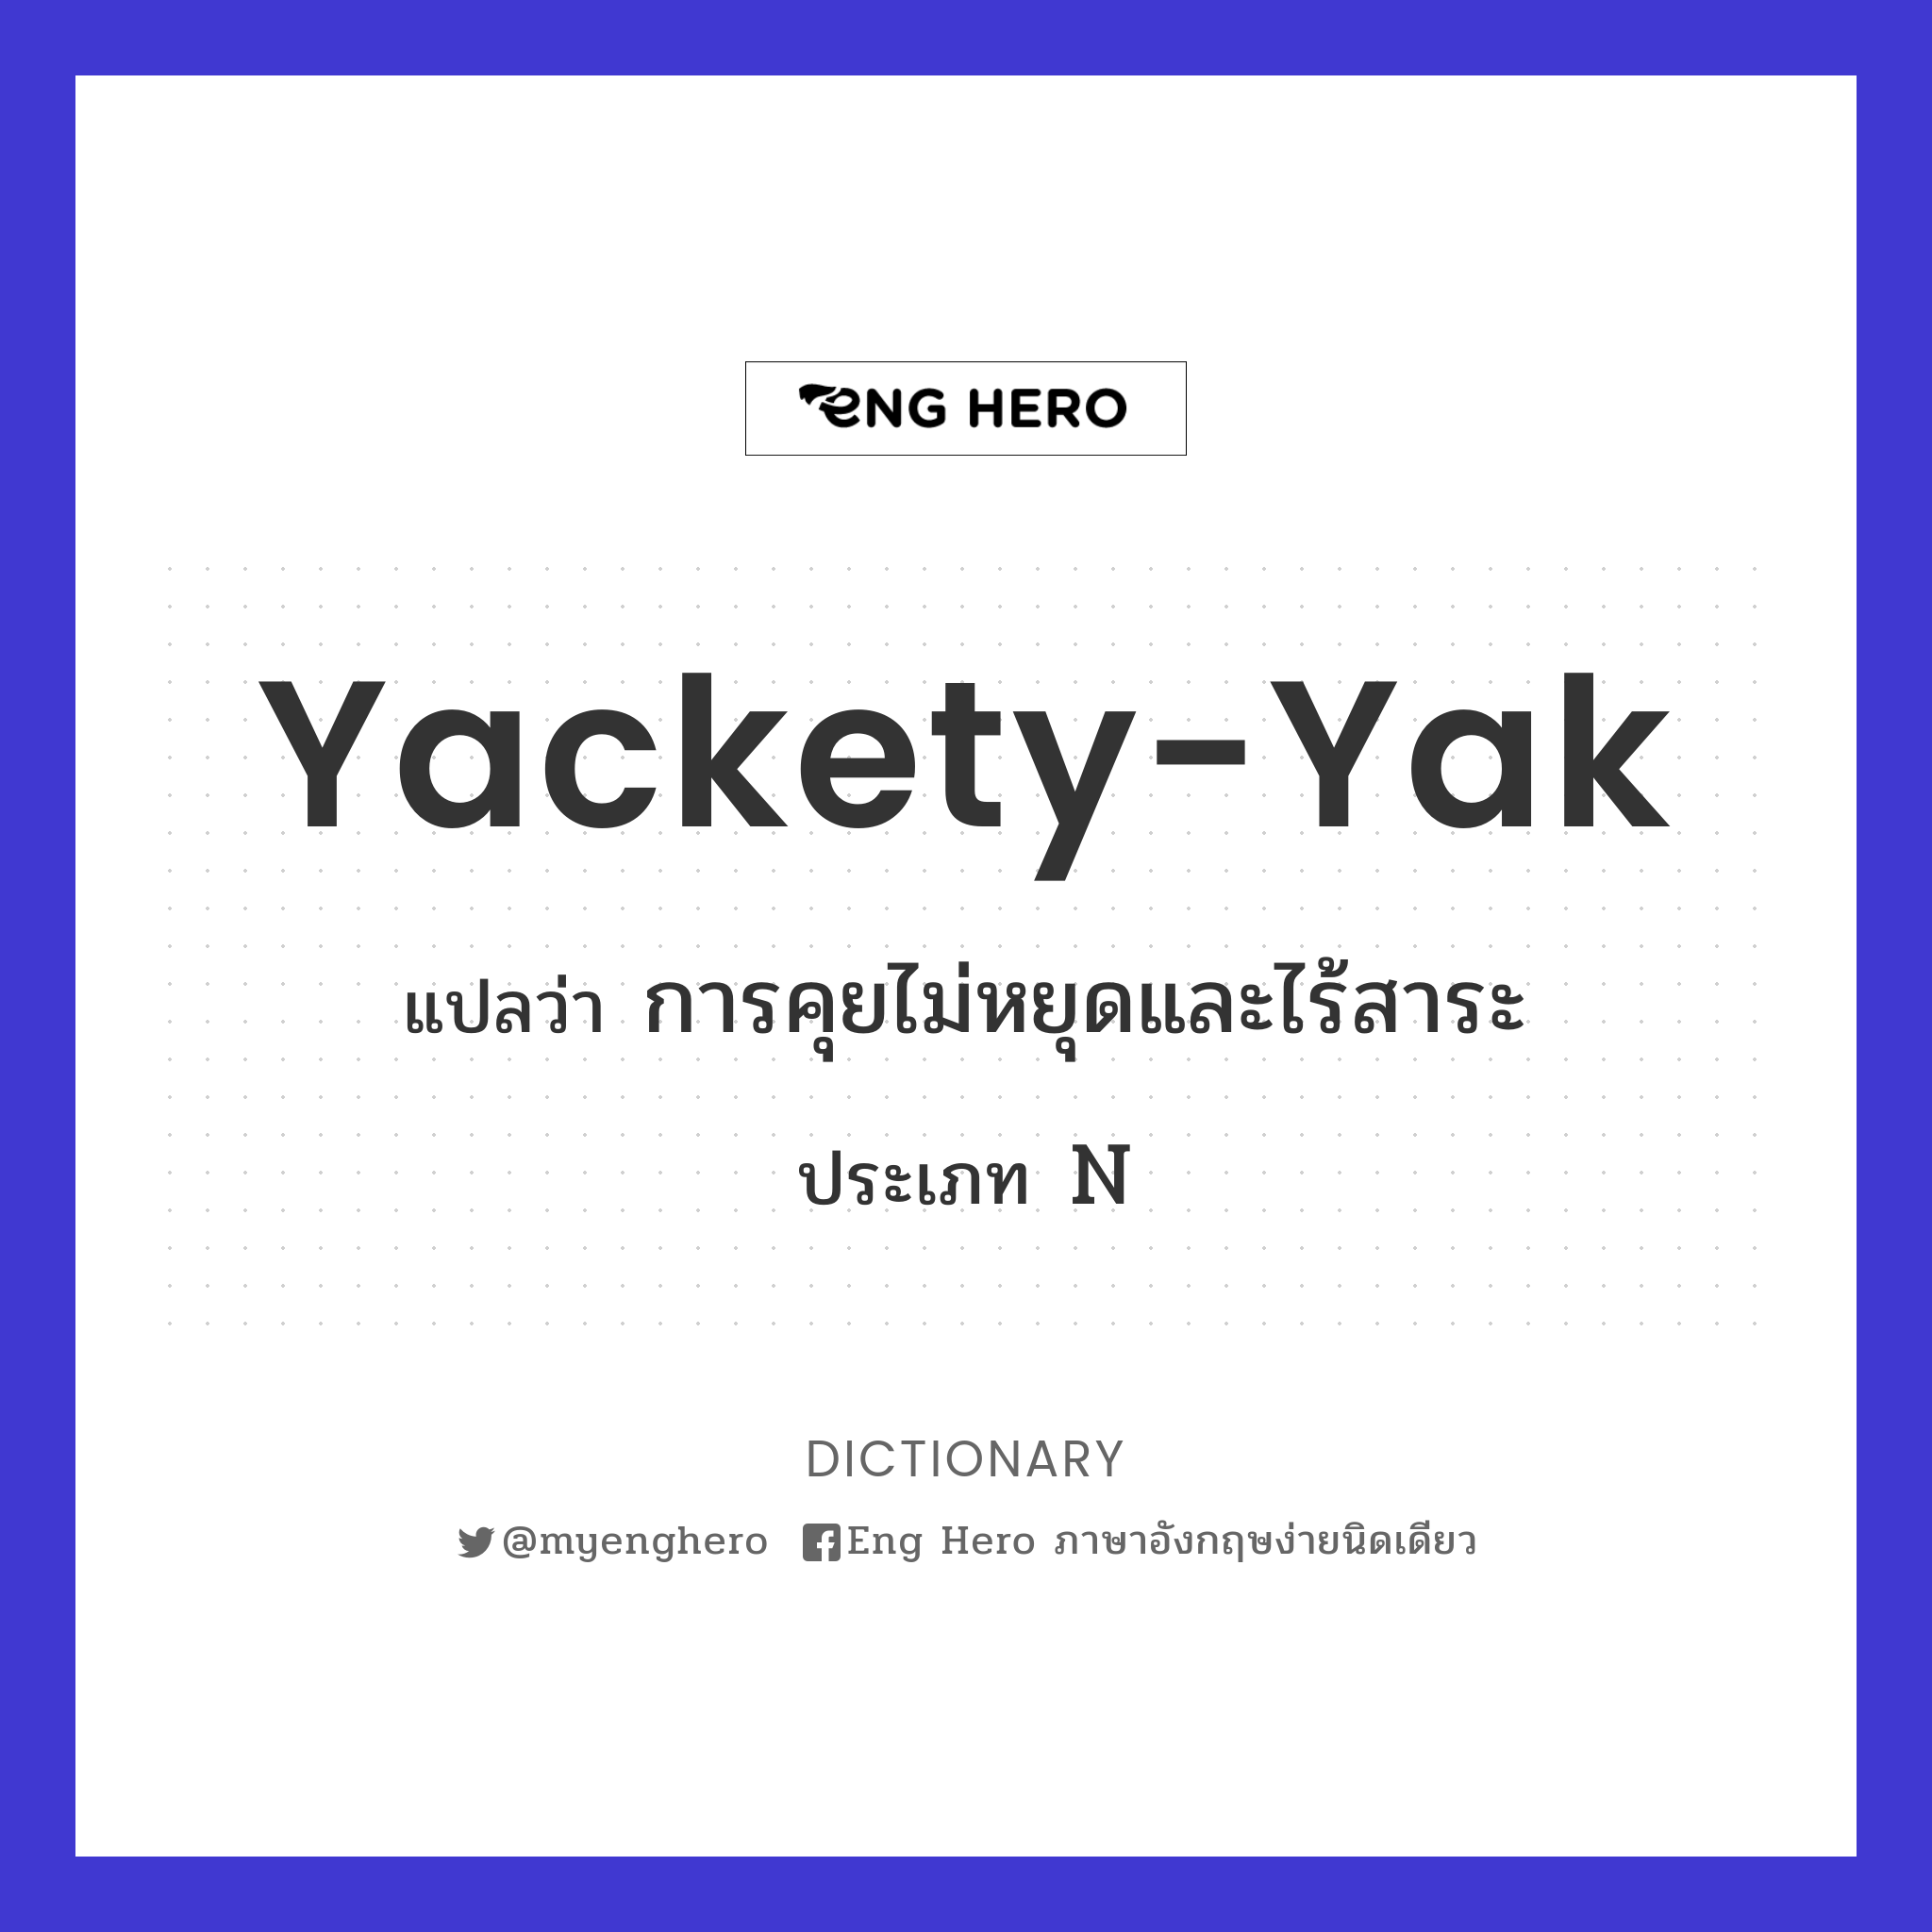 yackety-yak